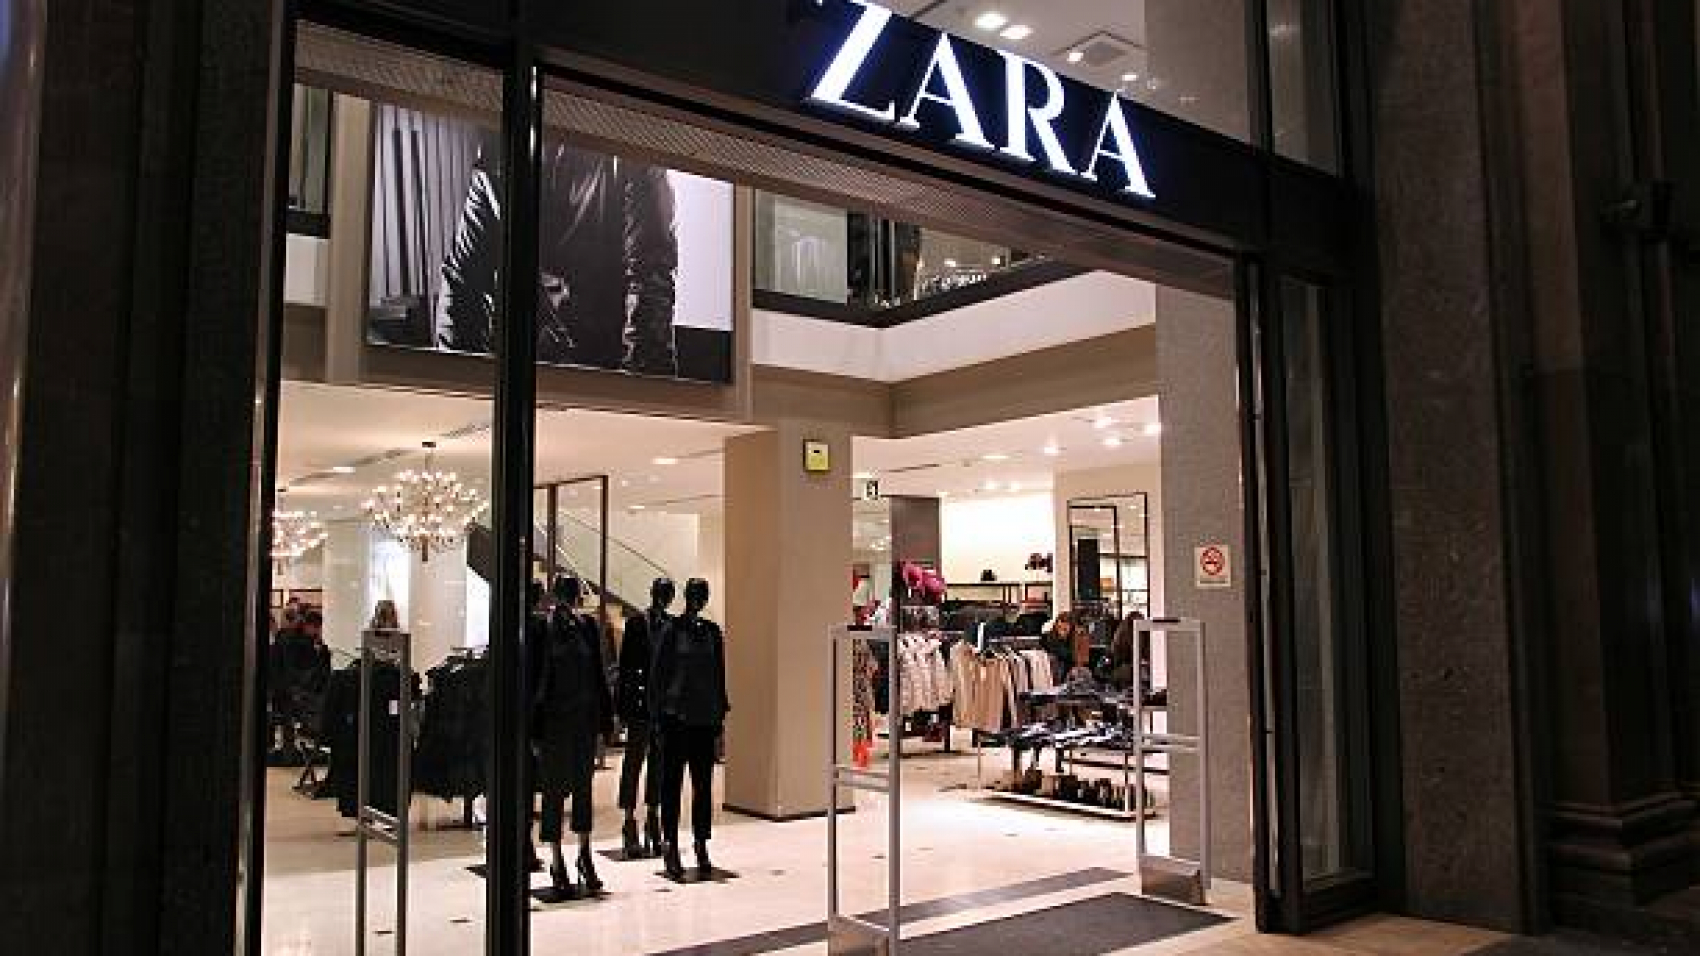 Barcelona, Spain - November 5, 2012: People visit Zara store on November 5, 2012 in Barcelona, Spain. Zara has 1,763 stores and had more than 7 billion EUR revenue in 2009.